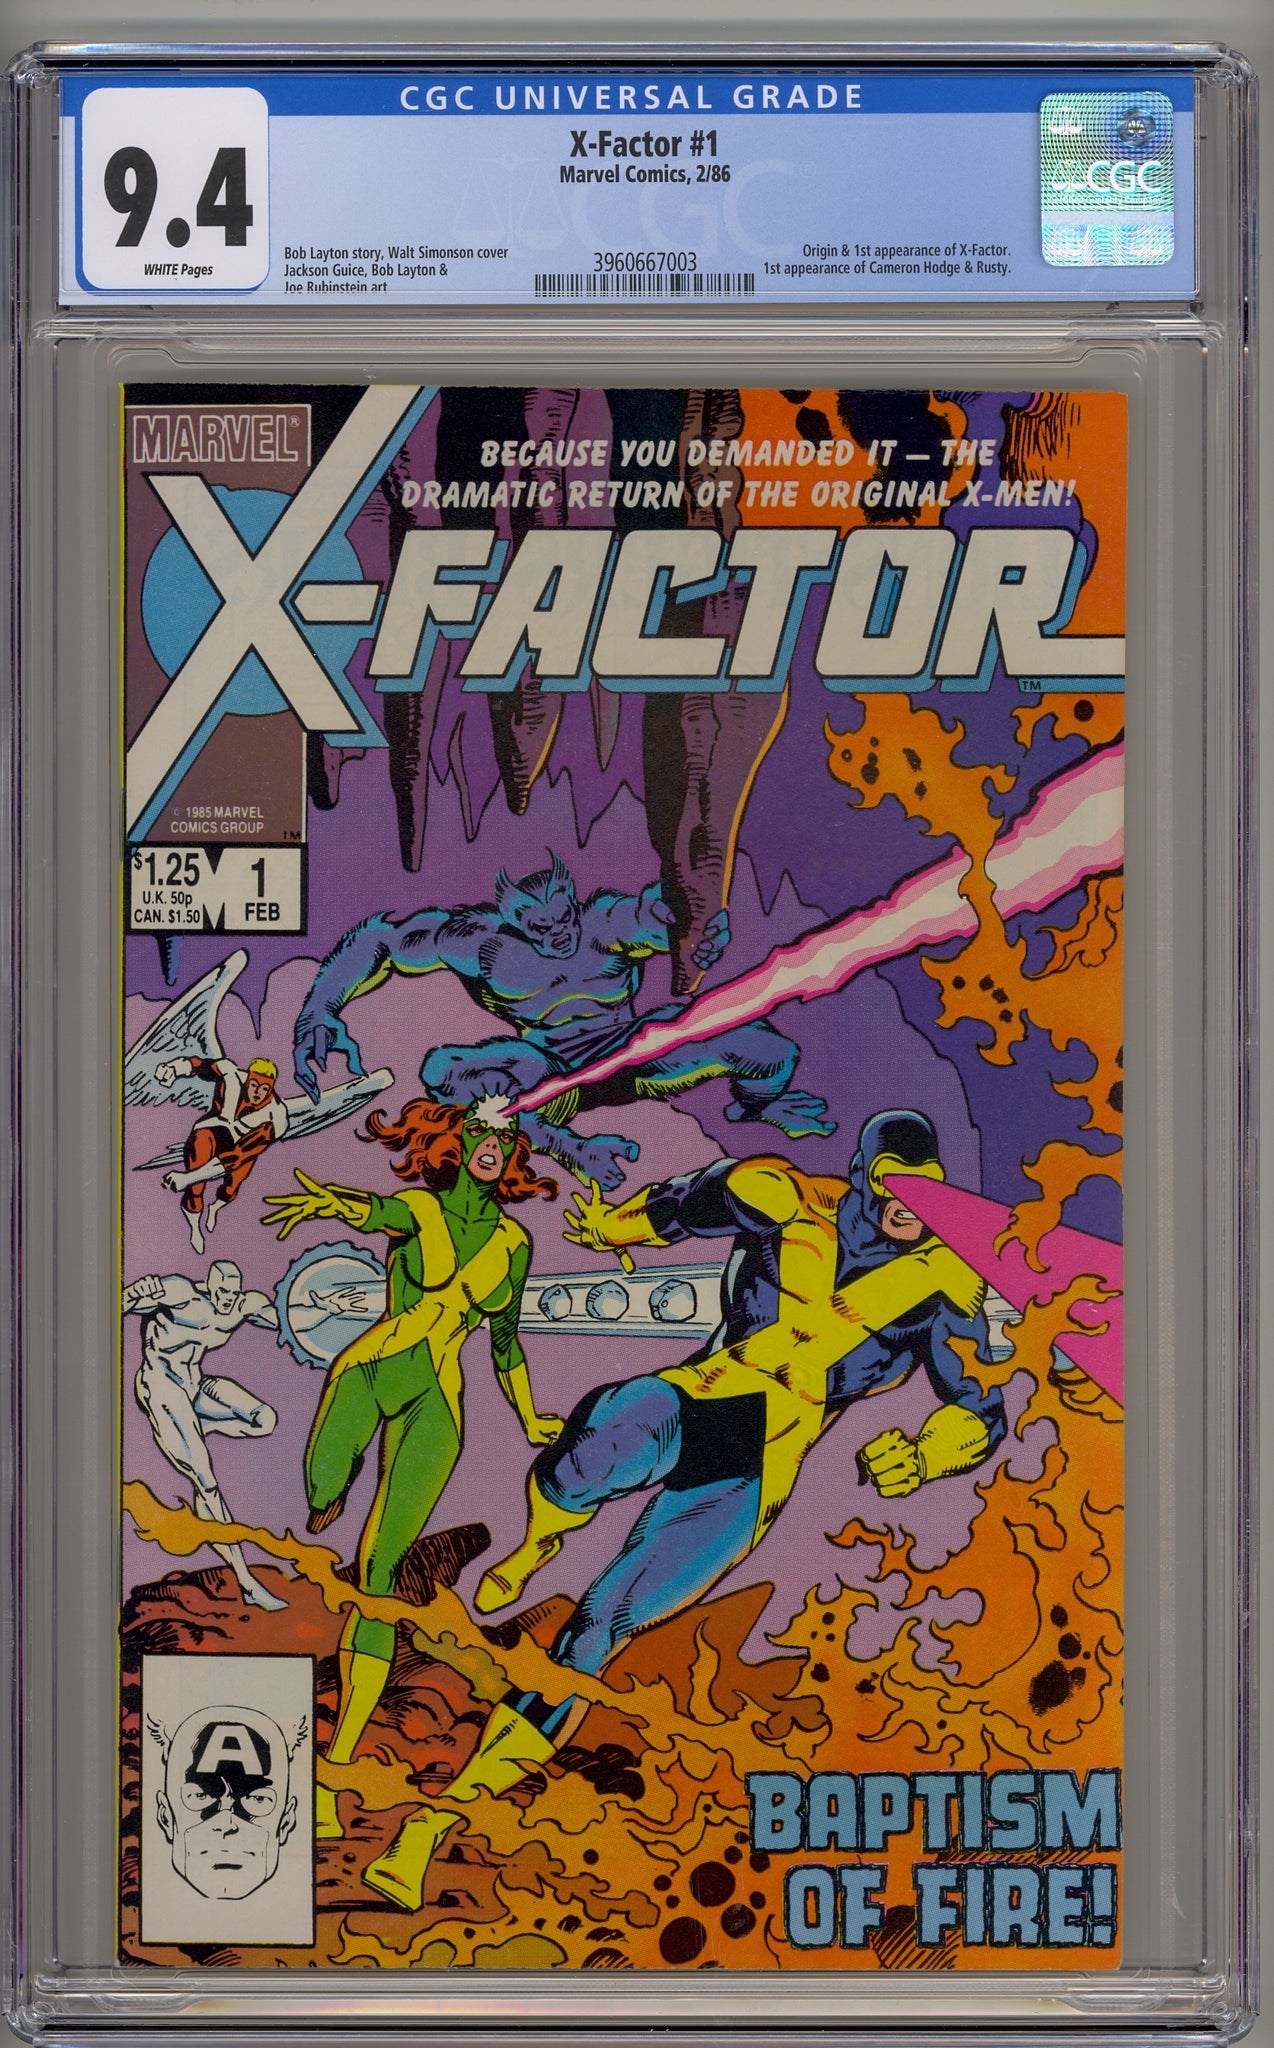 X-Factor #1 (1986)